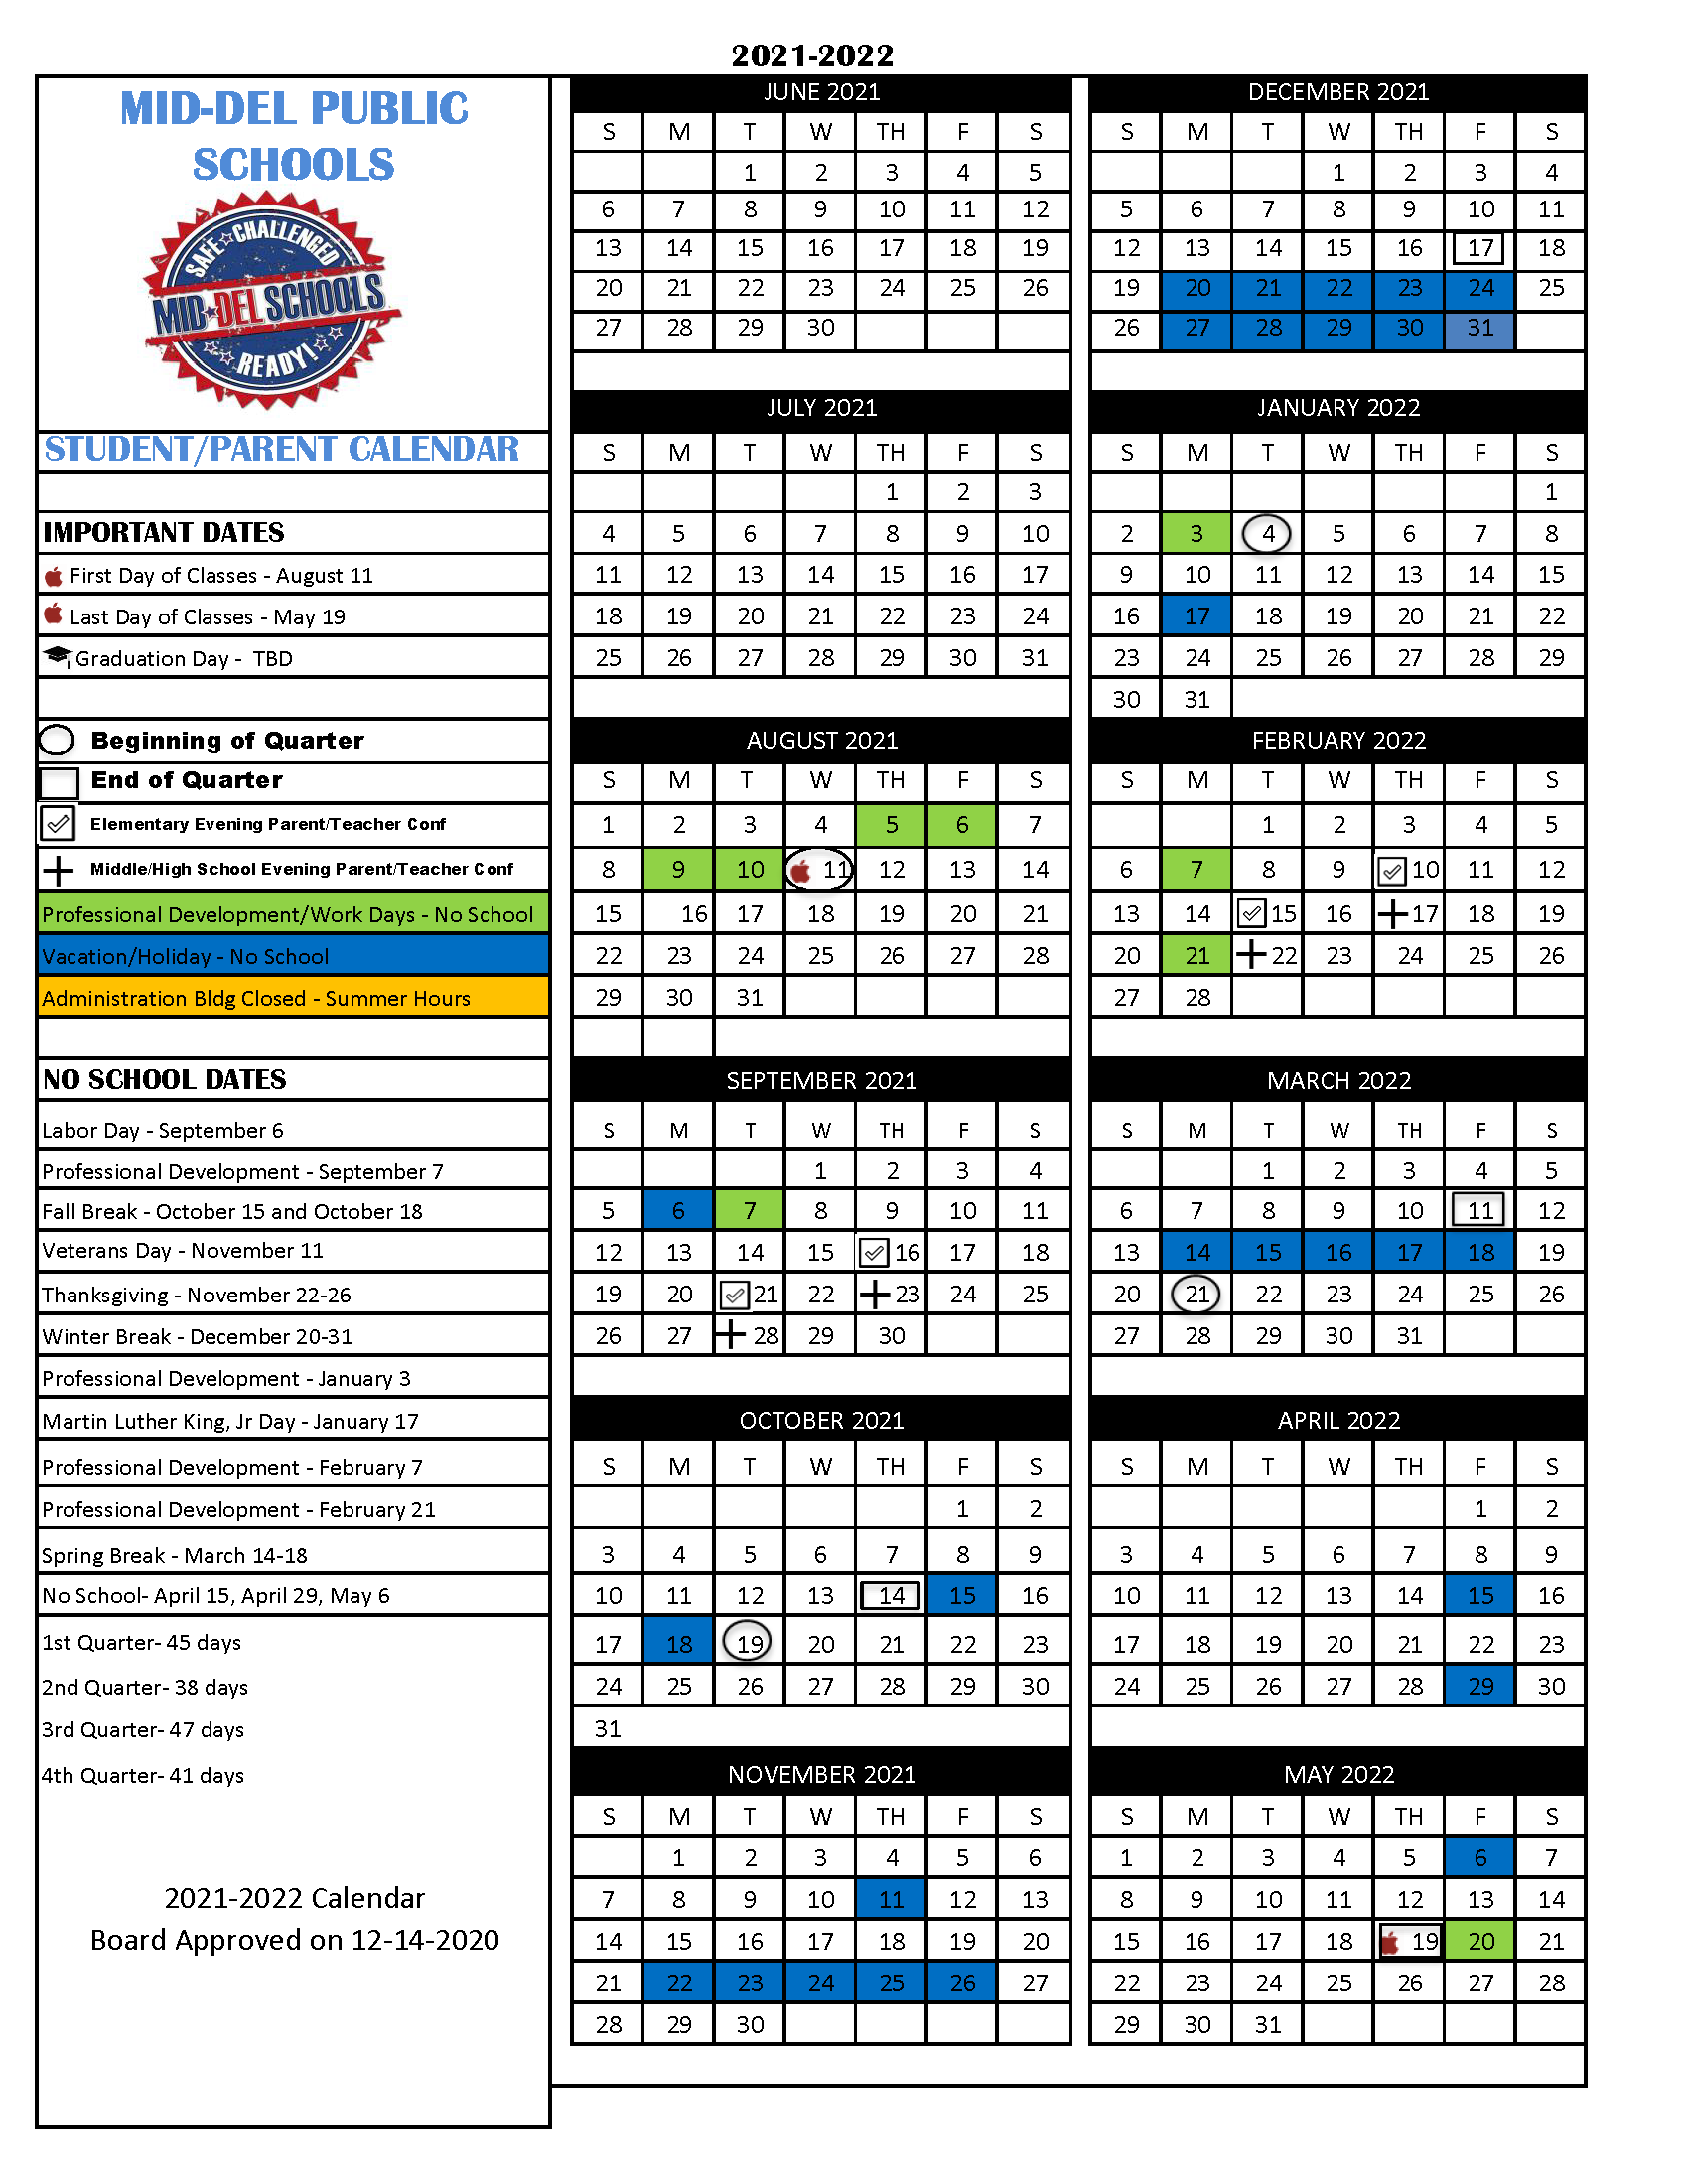 City Tech Summer 2022 Calendar 2021-2022 School Calendar | Mid-Del School District